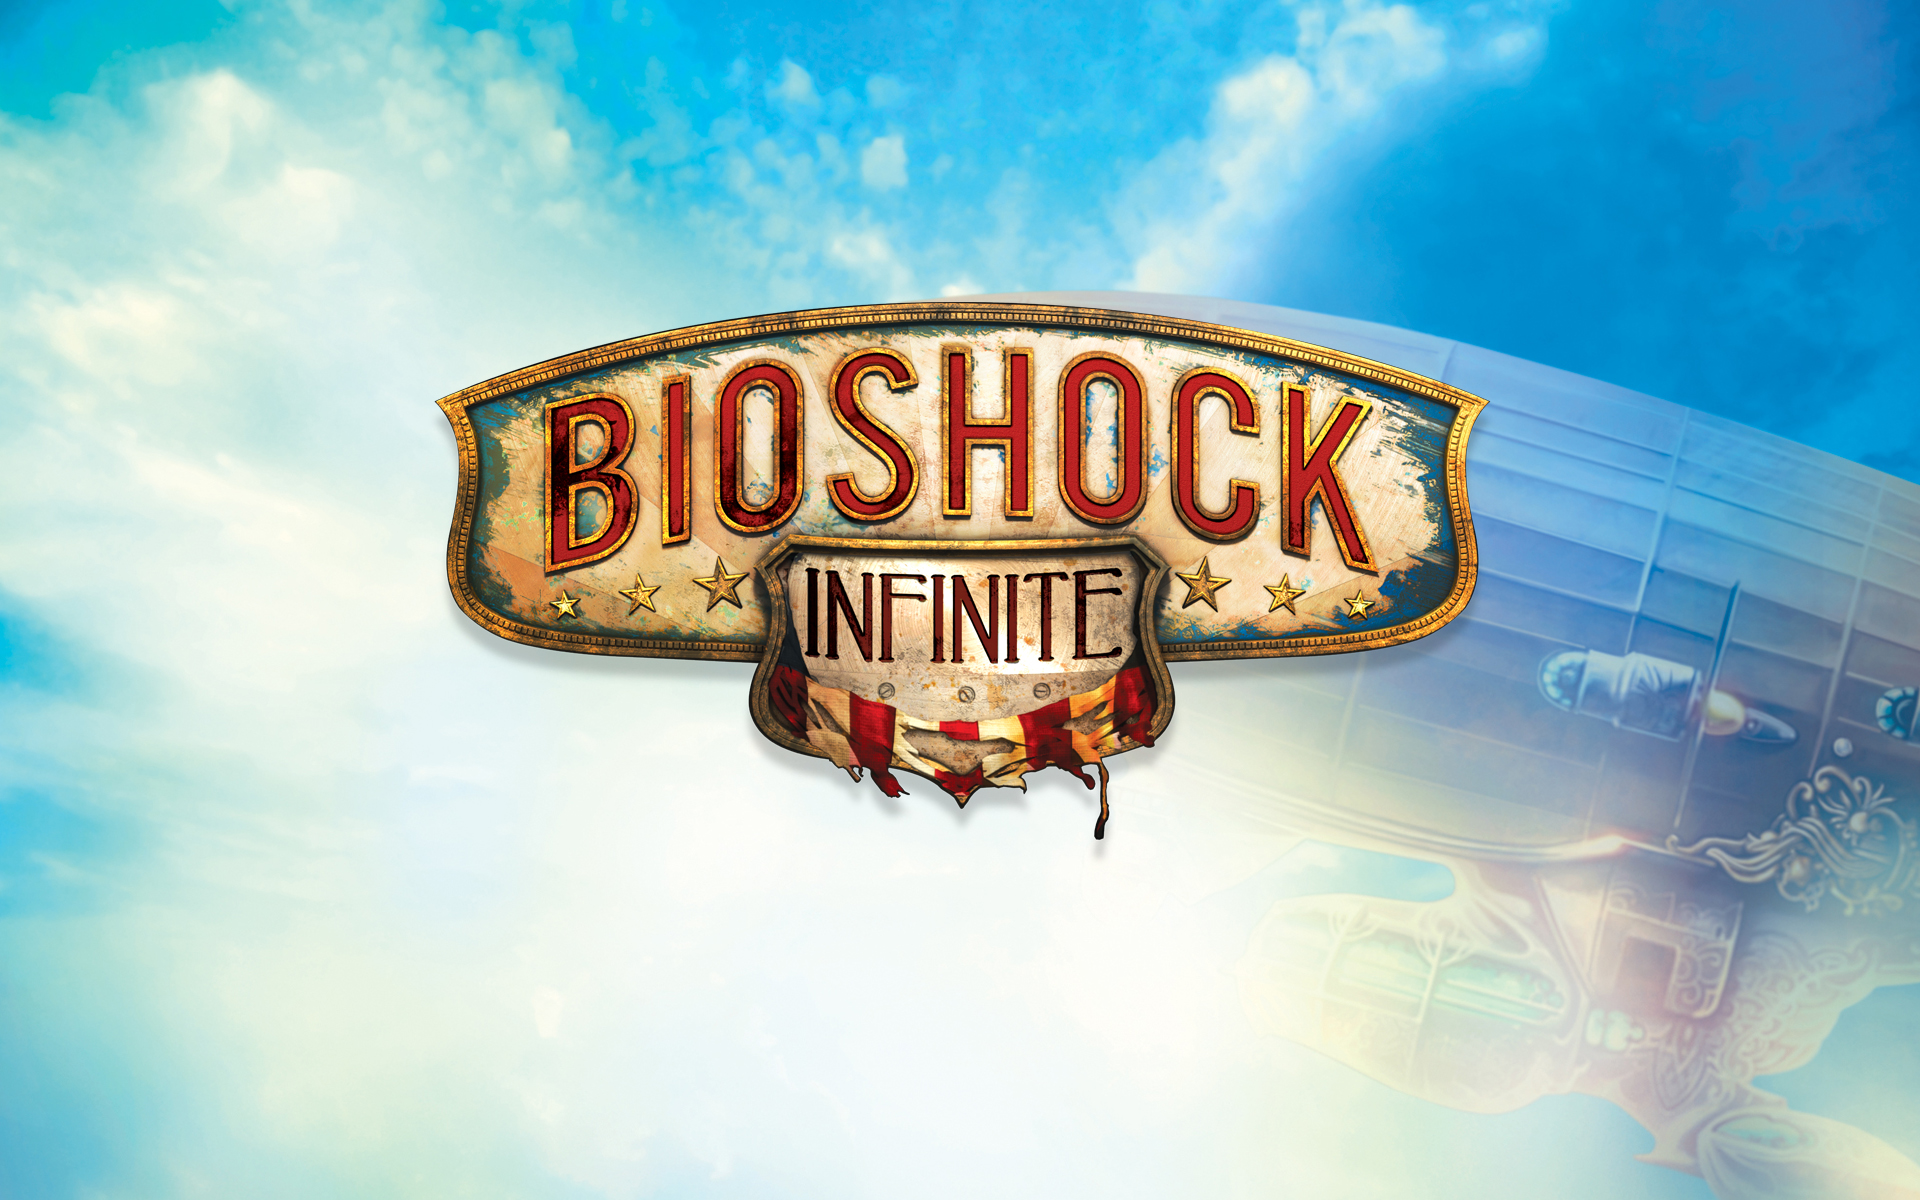 Elizabeth Bioshock Infinite HD Wallpaper